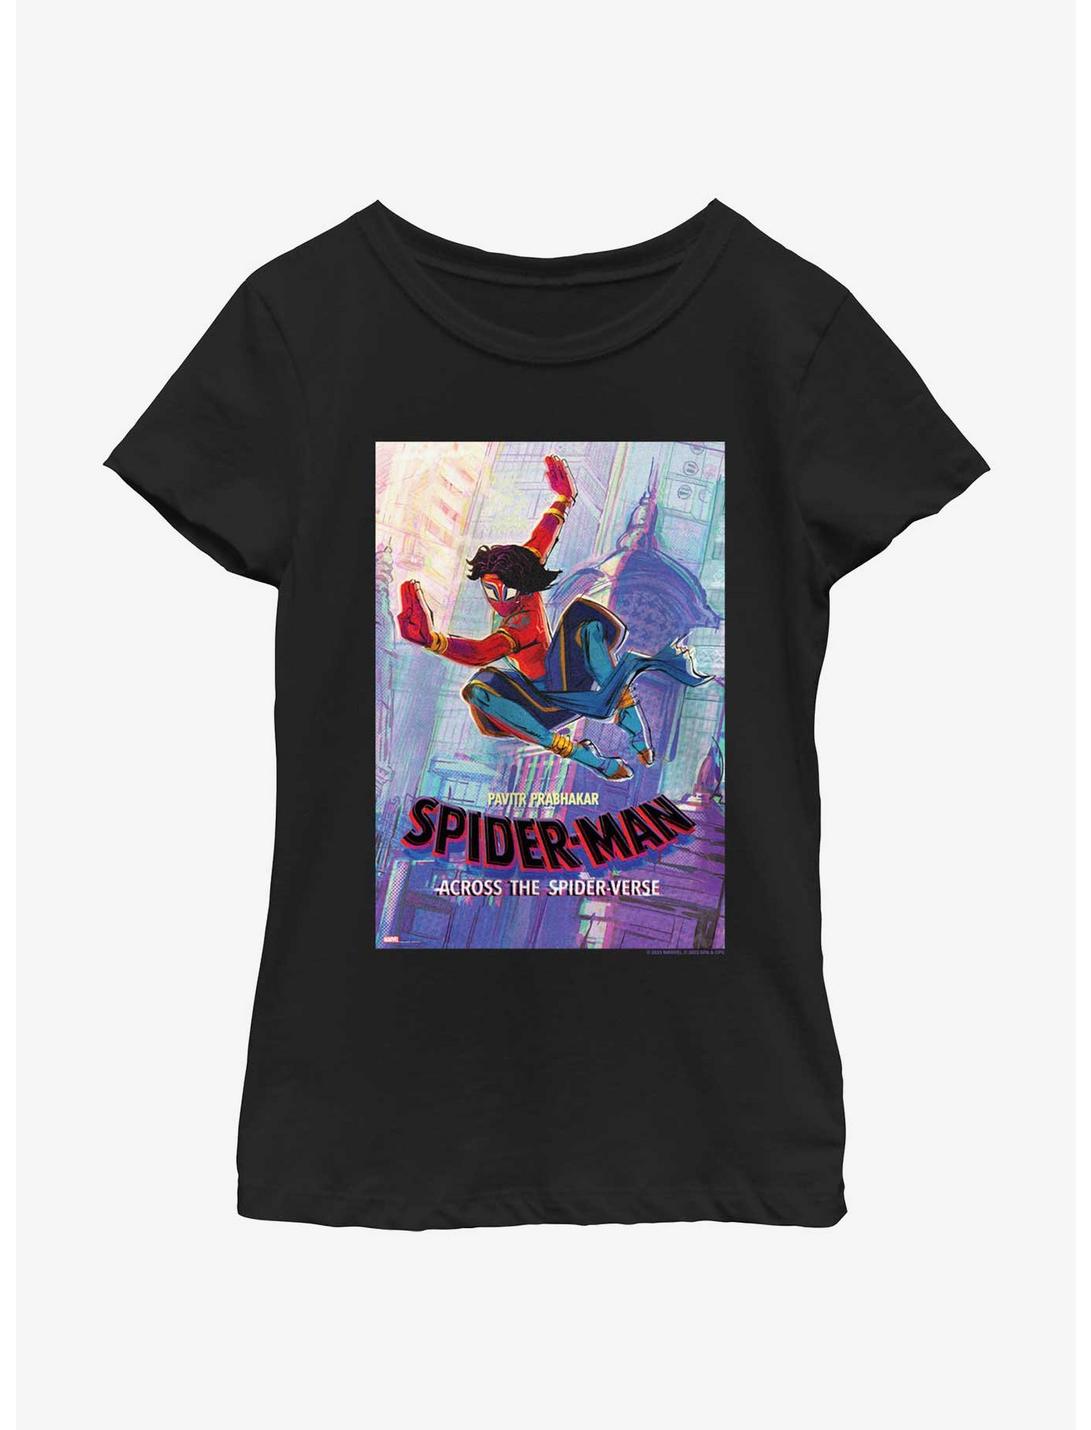 Spider-Man: Across The Spider-Verse Pavitr Prabhakar Poster Youth Girls T-Shirt, BLACK, hi-res